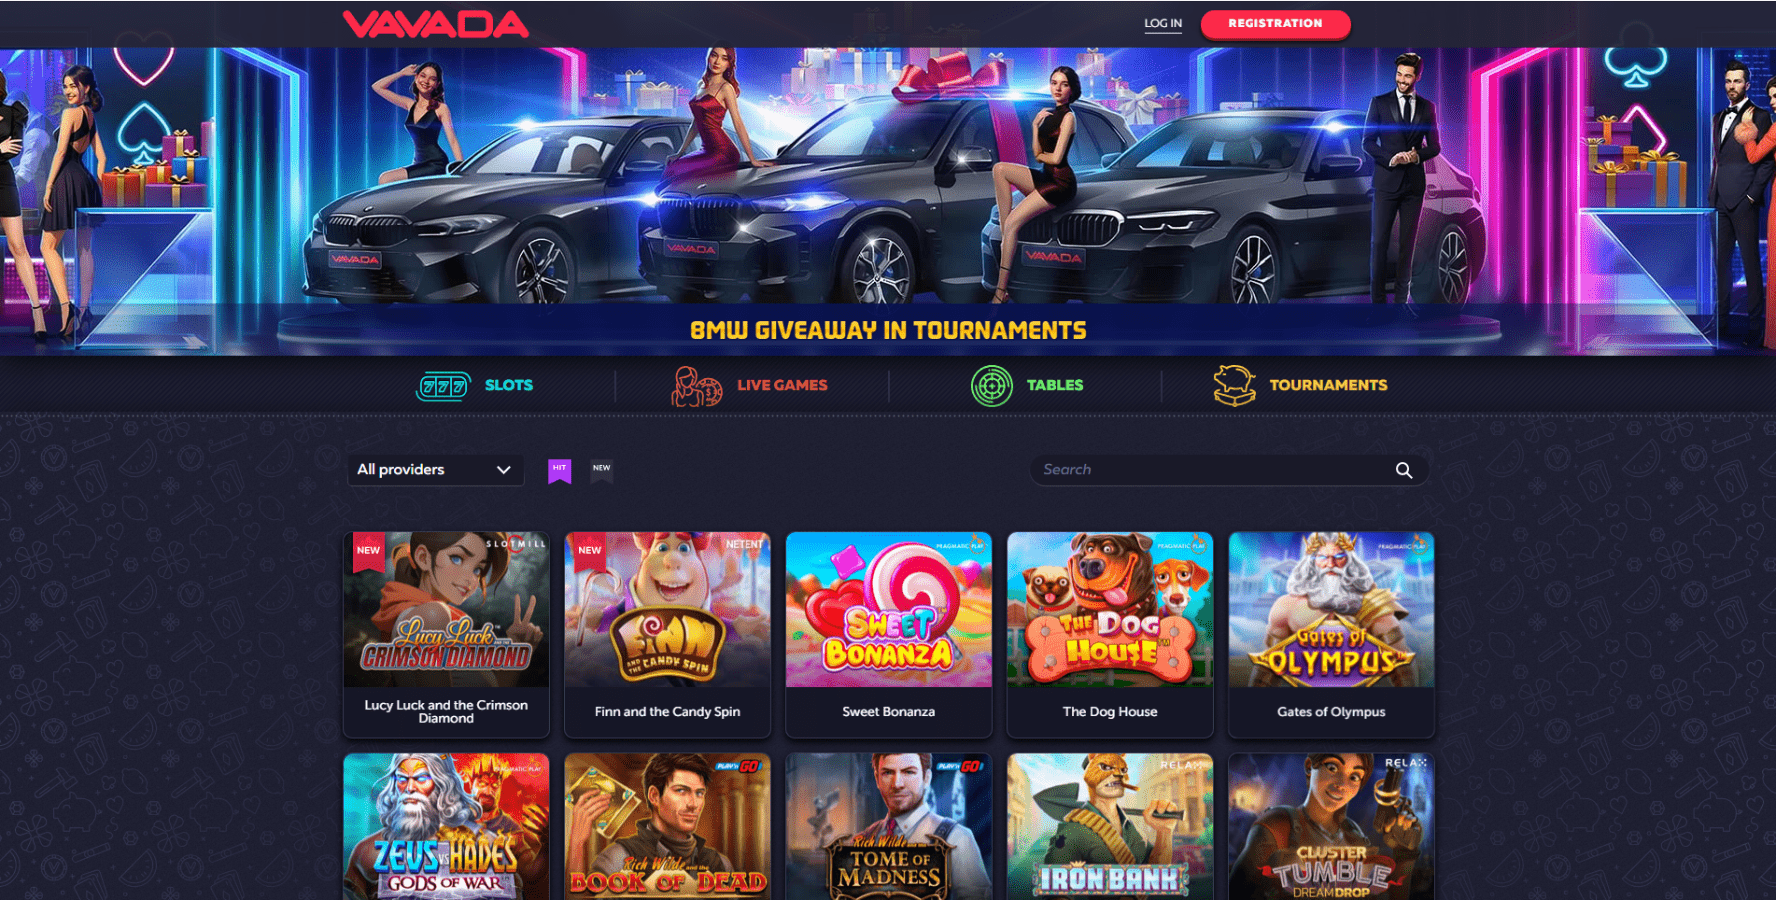 Online Casino Vavada Home Page